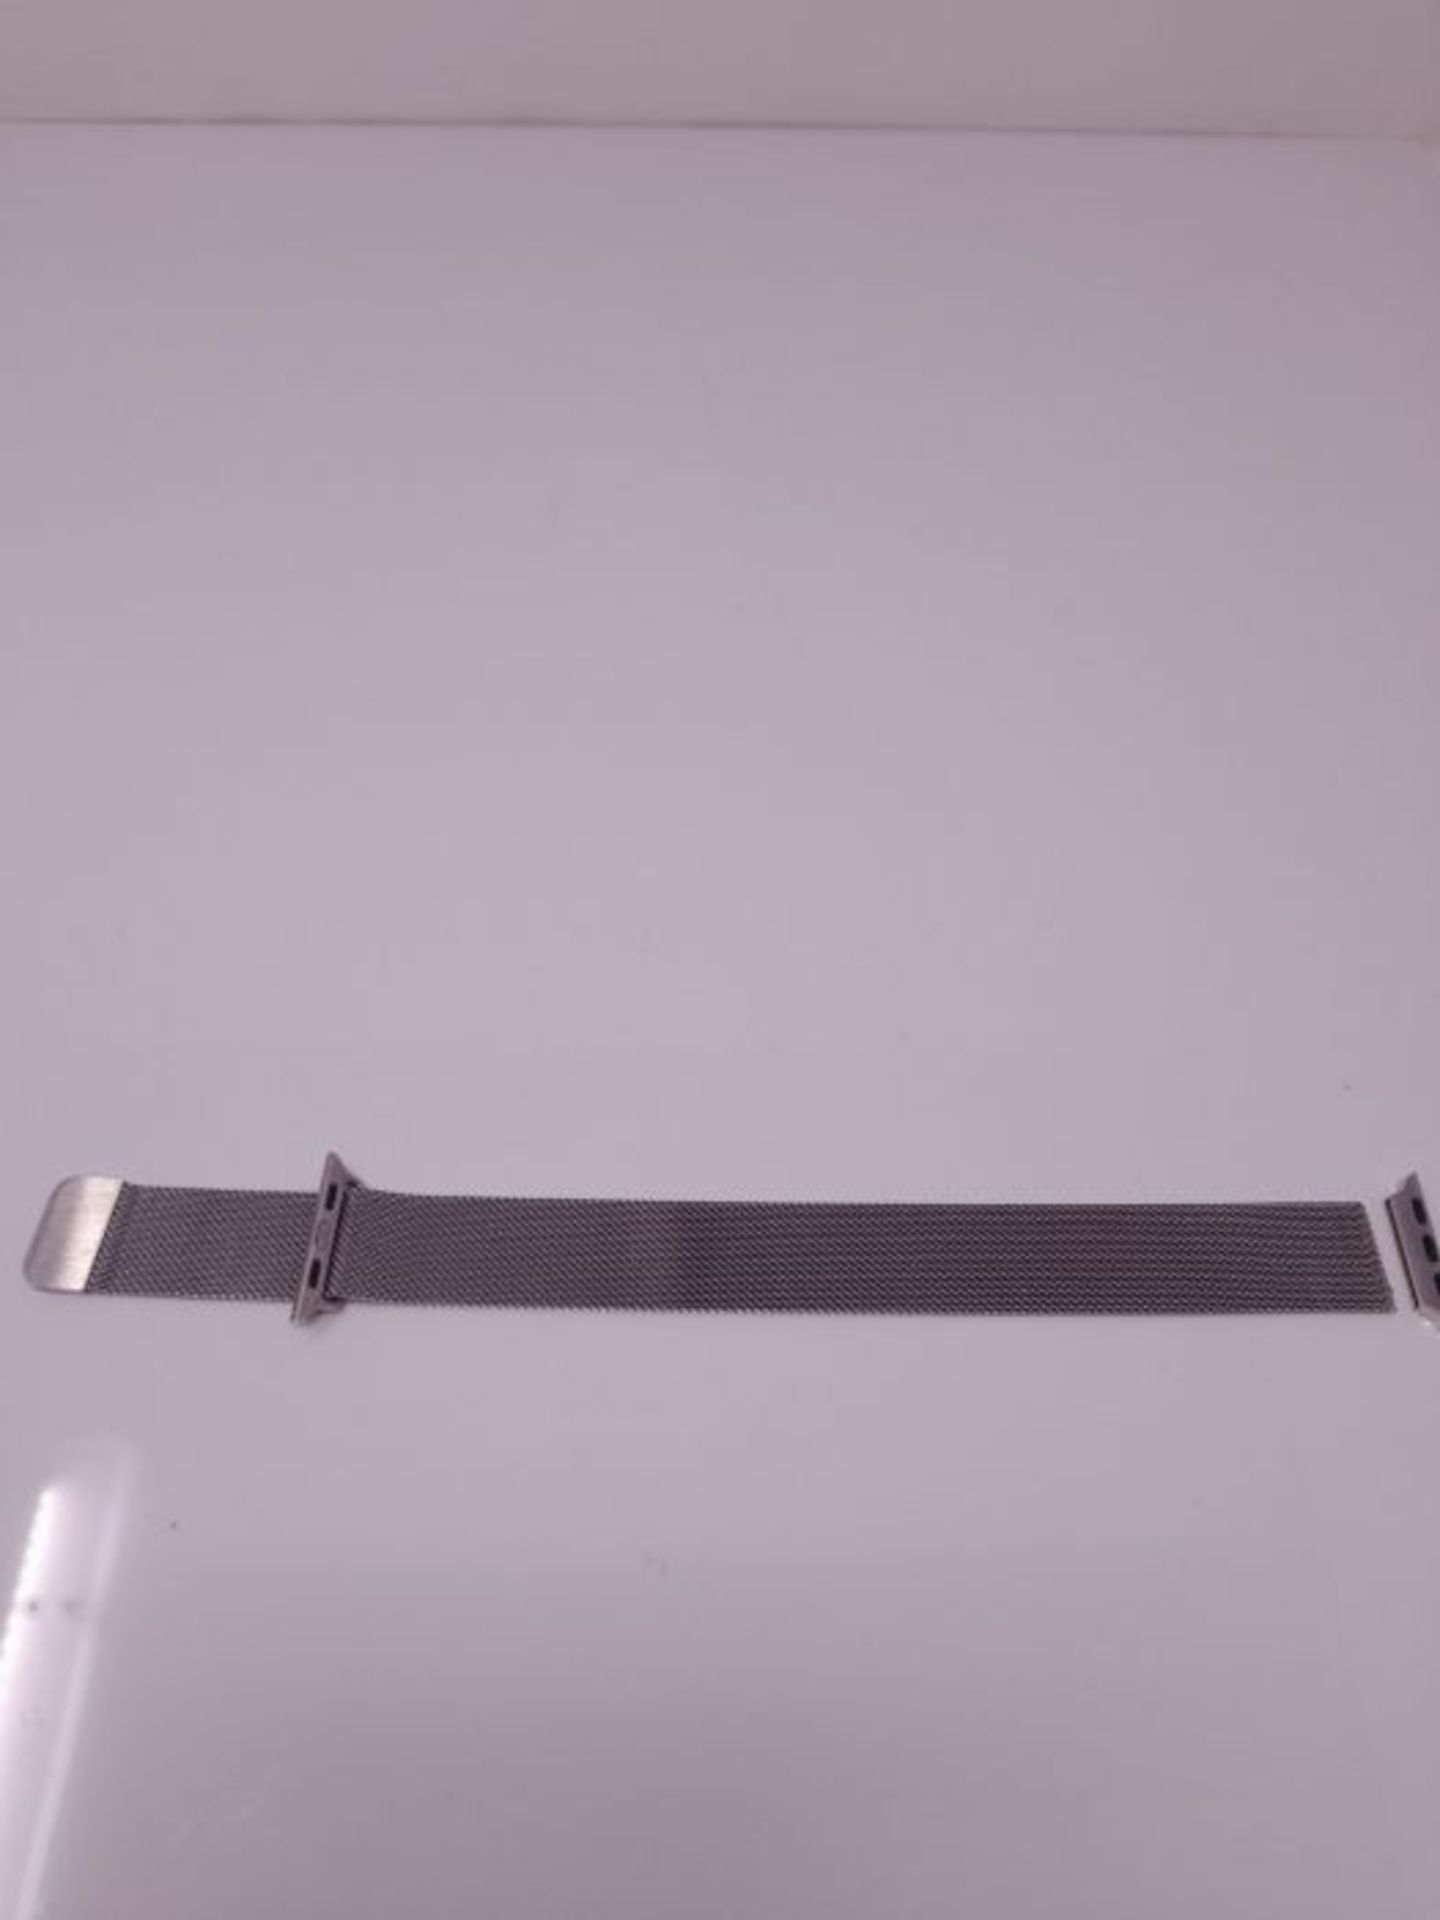 Neoda Ersatzarmband Kompatibel mit Apple Watch Armband 38mm 40mm, Metal Edelstahl Eins